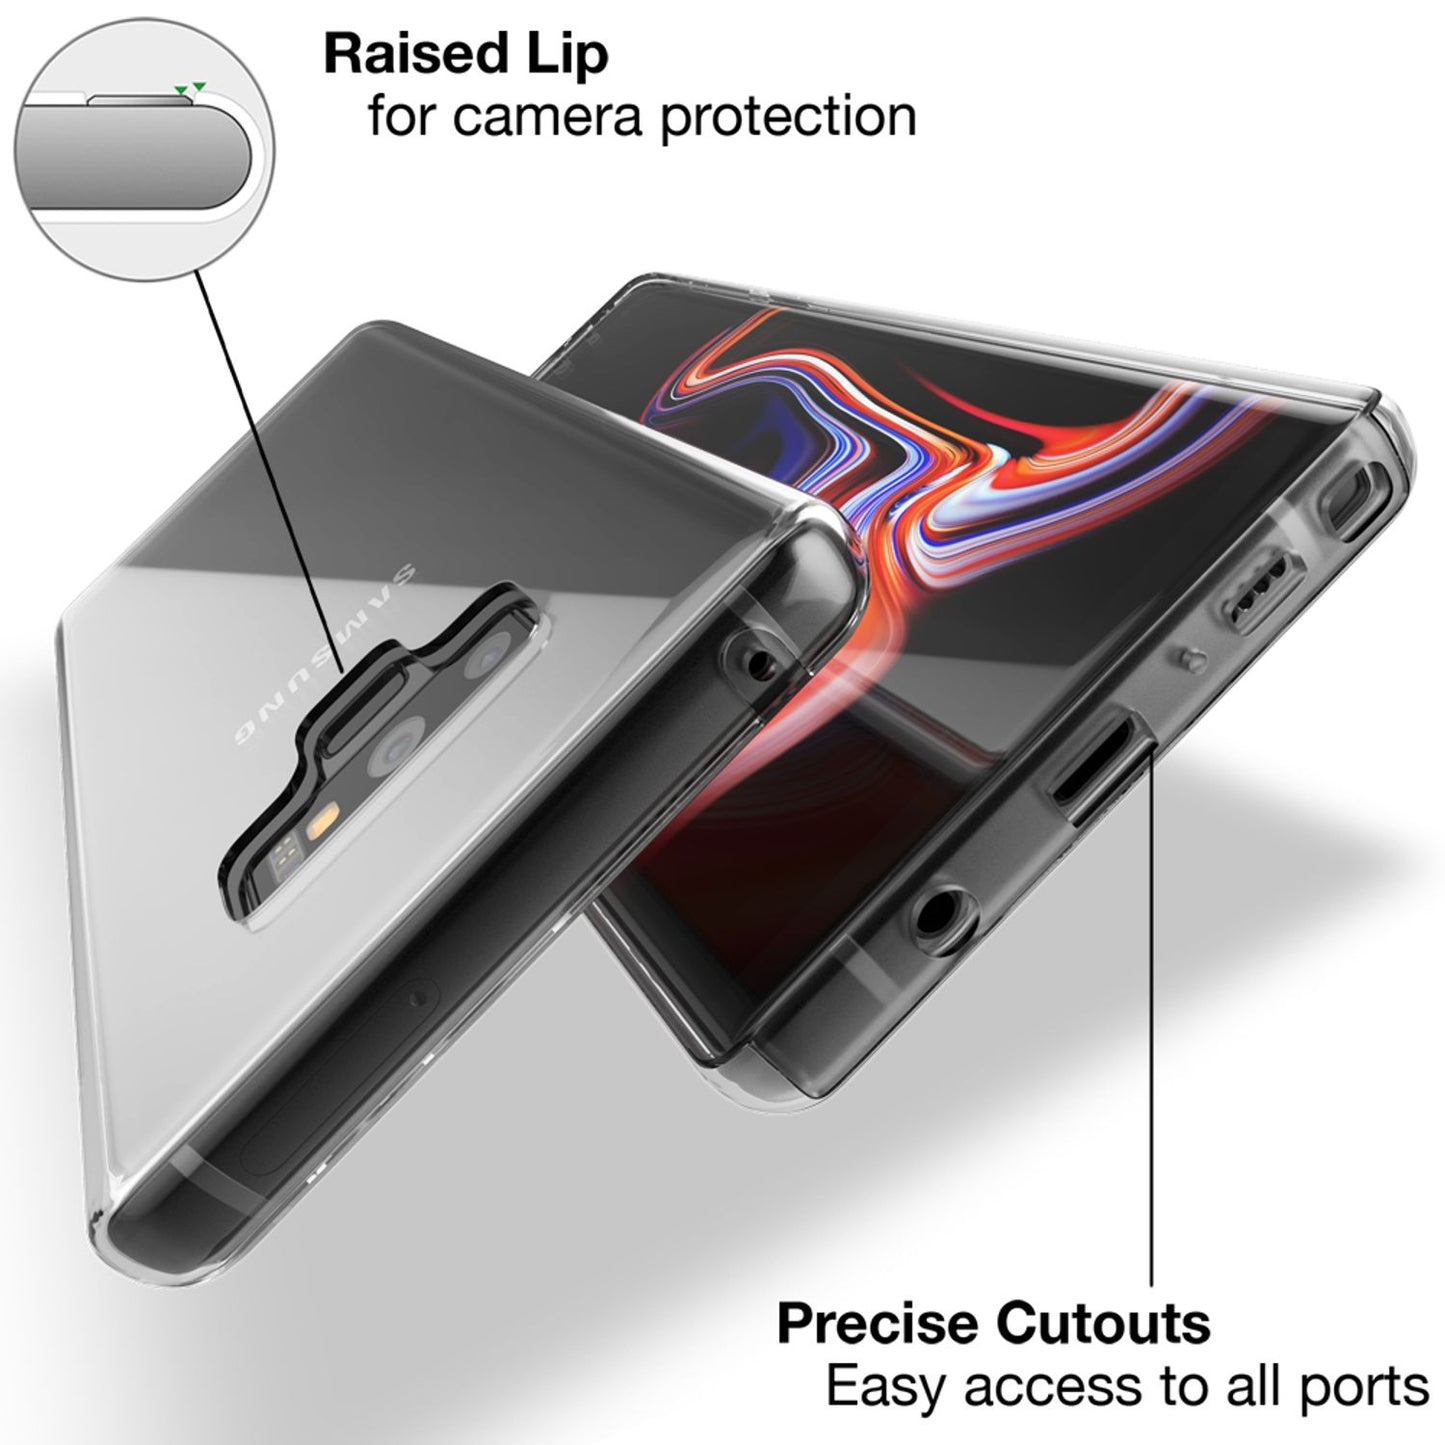 NALIA 360 Grad Handy Hülle für Samsung Galaxy Note 9, Full Cover Case Bumper